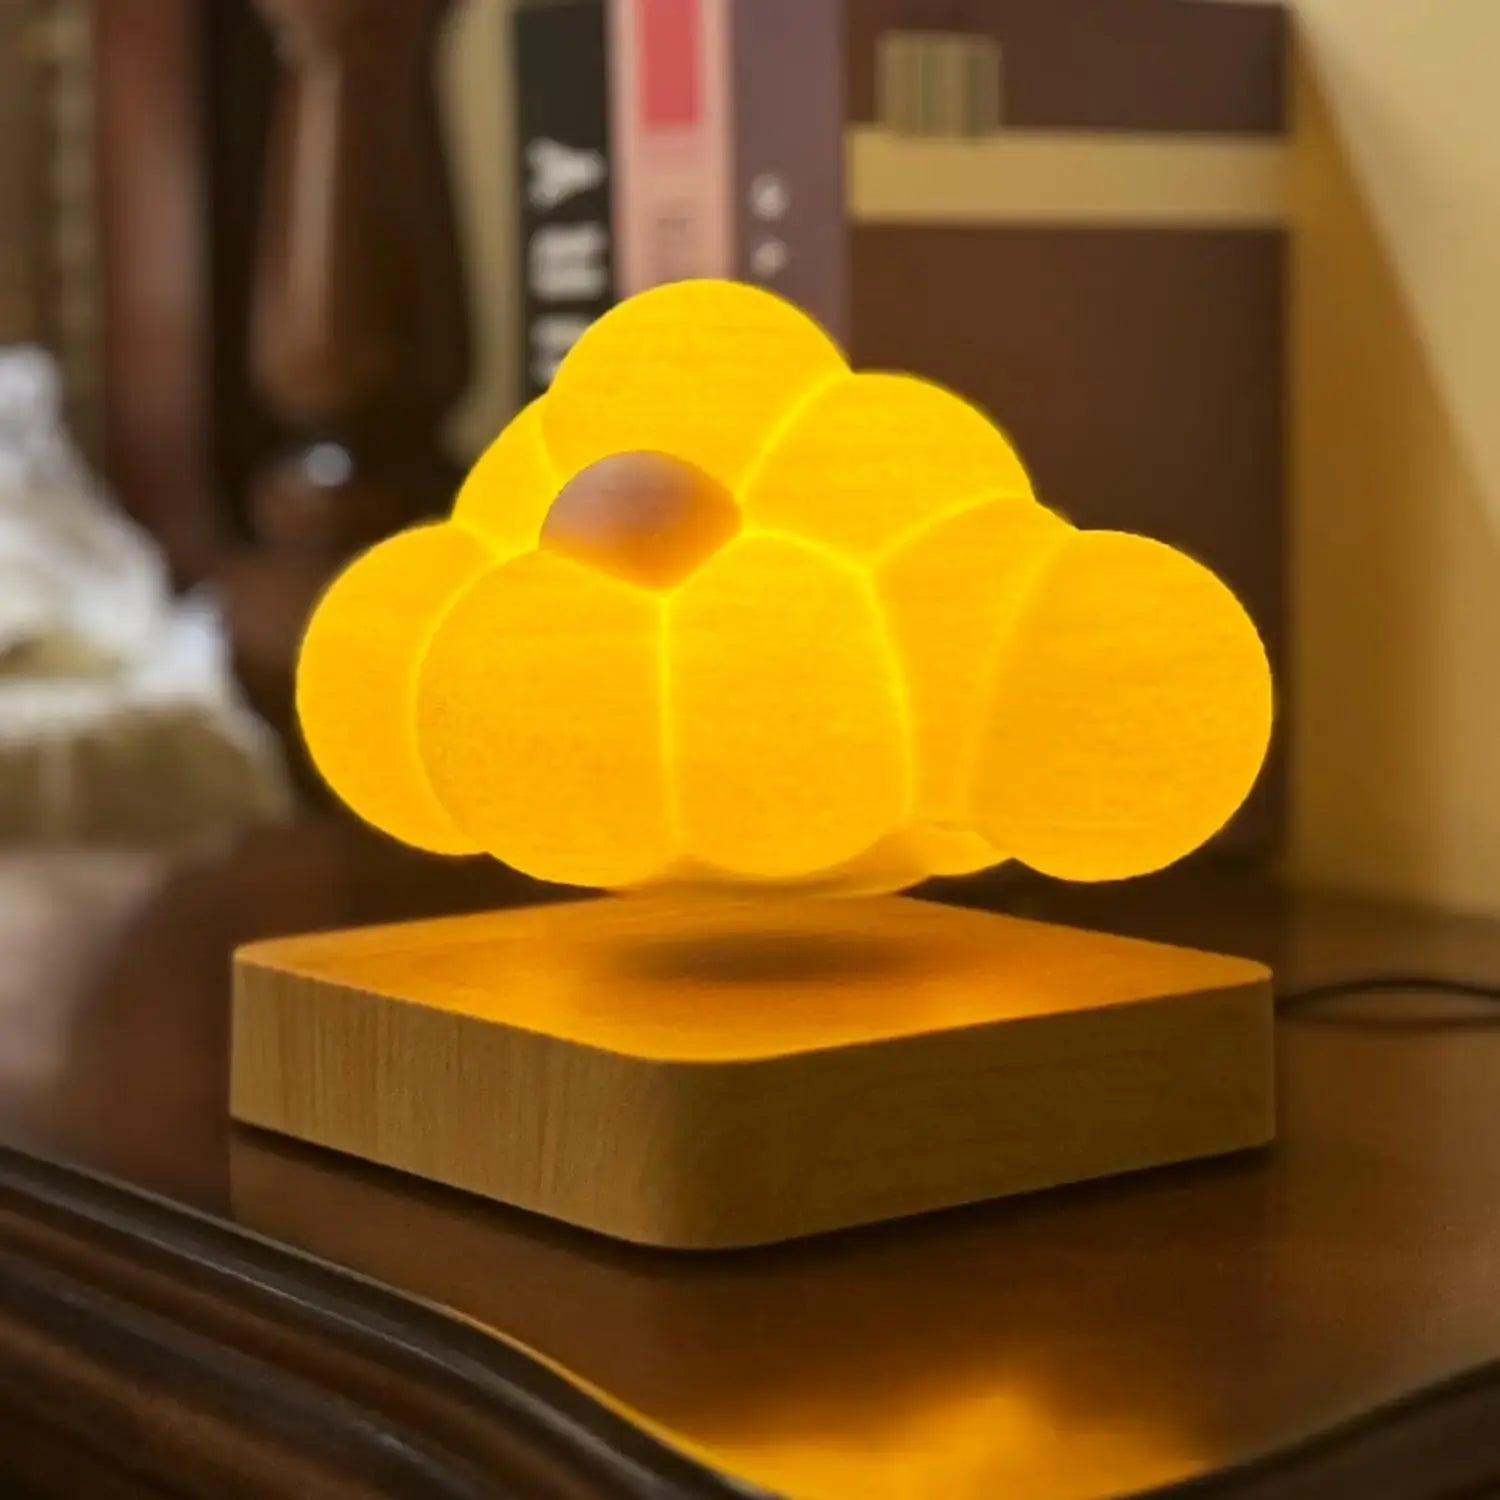 LED Floating Cloud Lamp with 3 Lighting Modes - ACO Marketplace